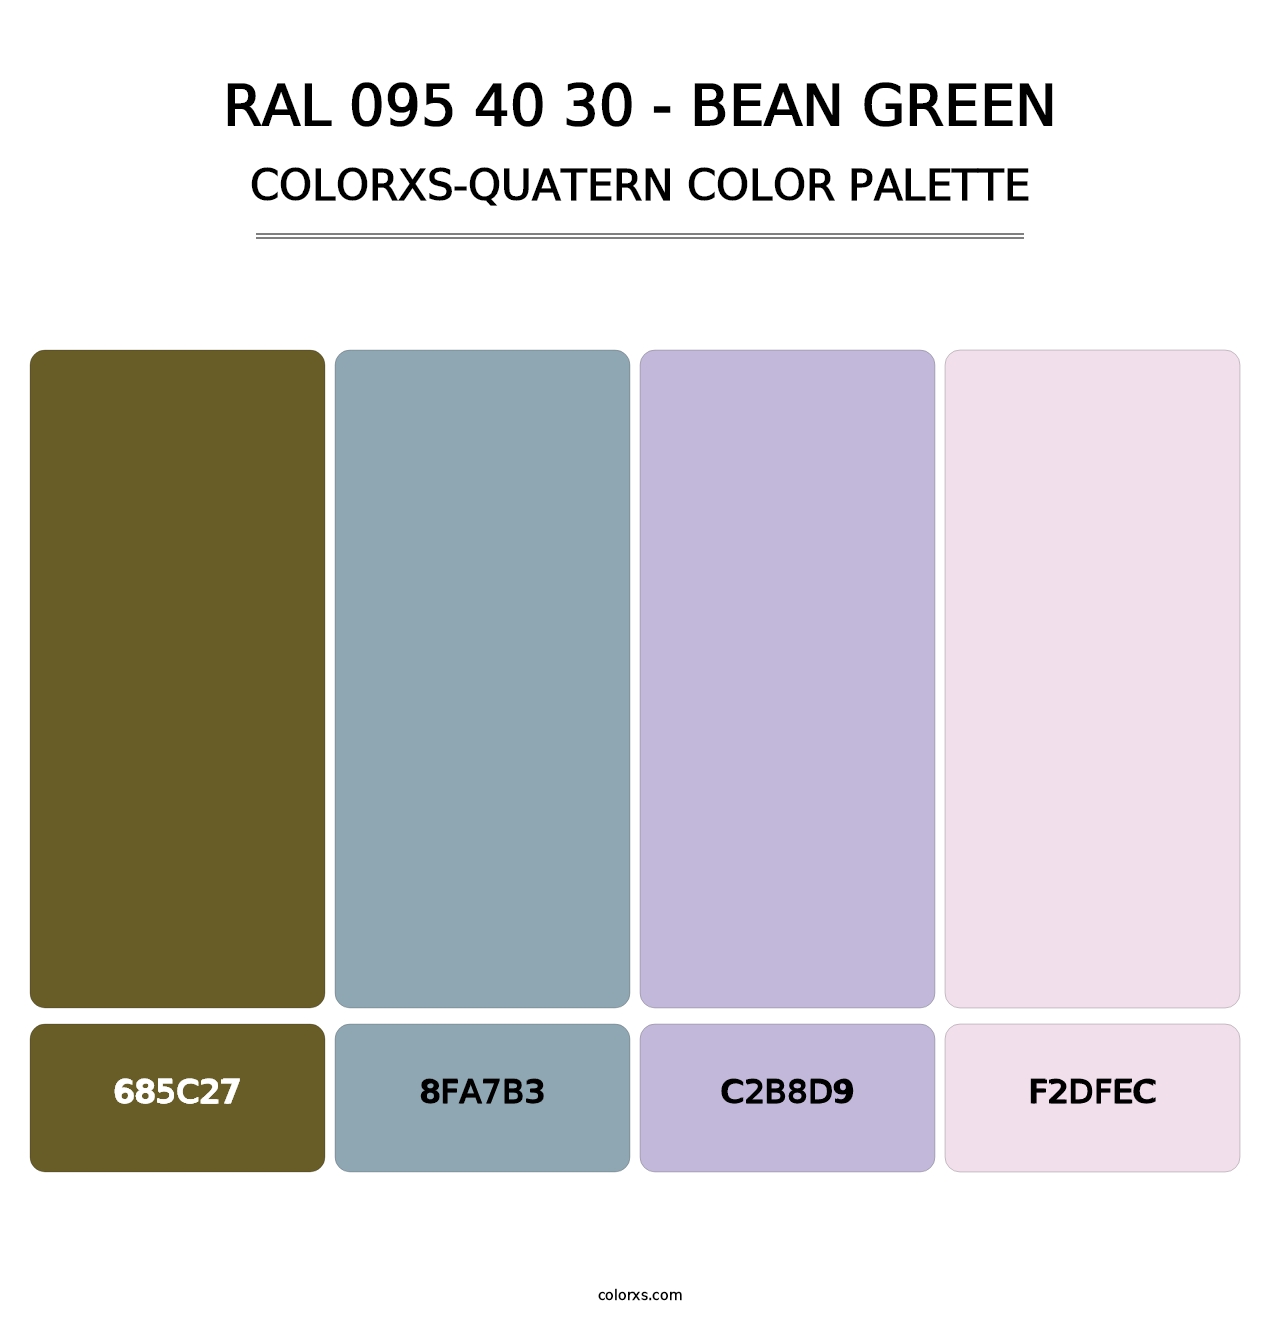 RAL 095 40 30 - Bean Green - Colorxs Quatern Palette